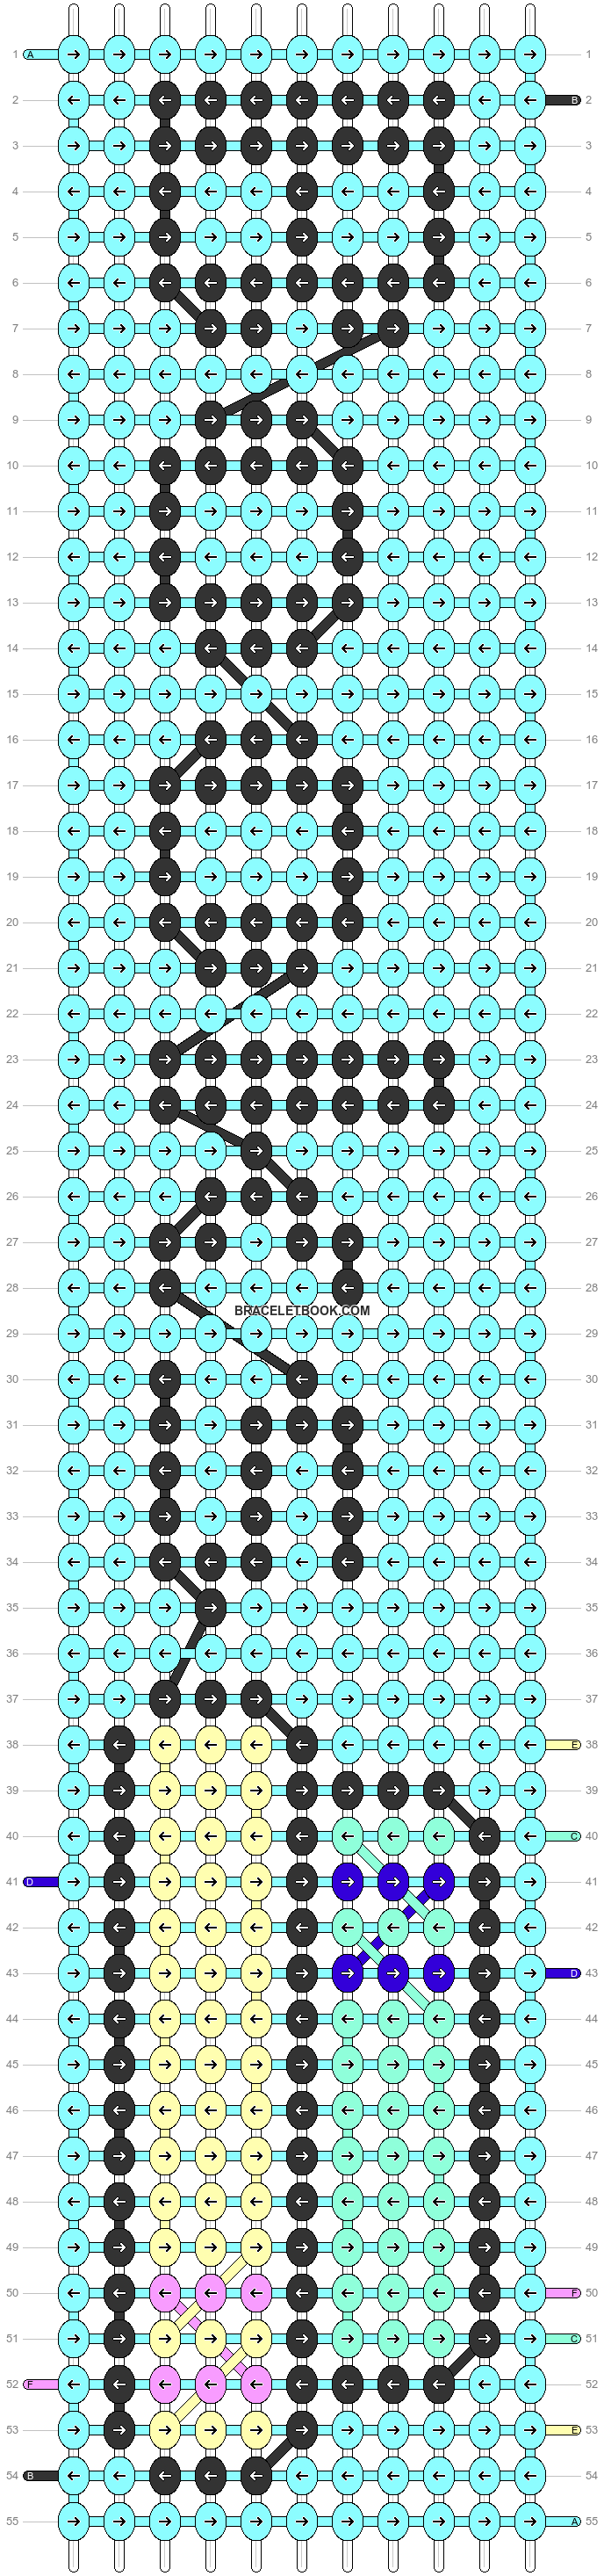 Alpha pattern #88815 variation #191679 pattern